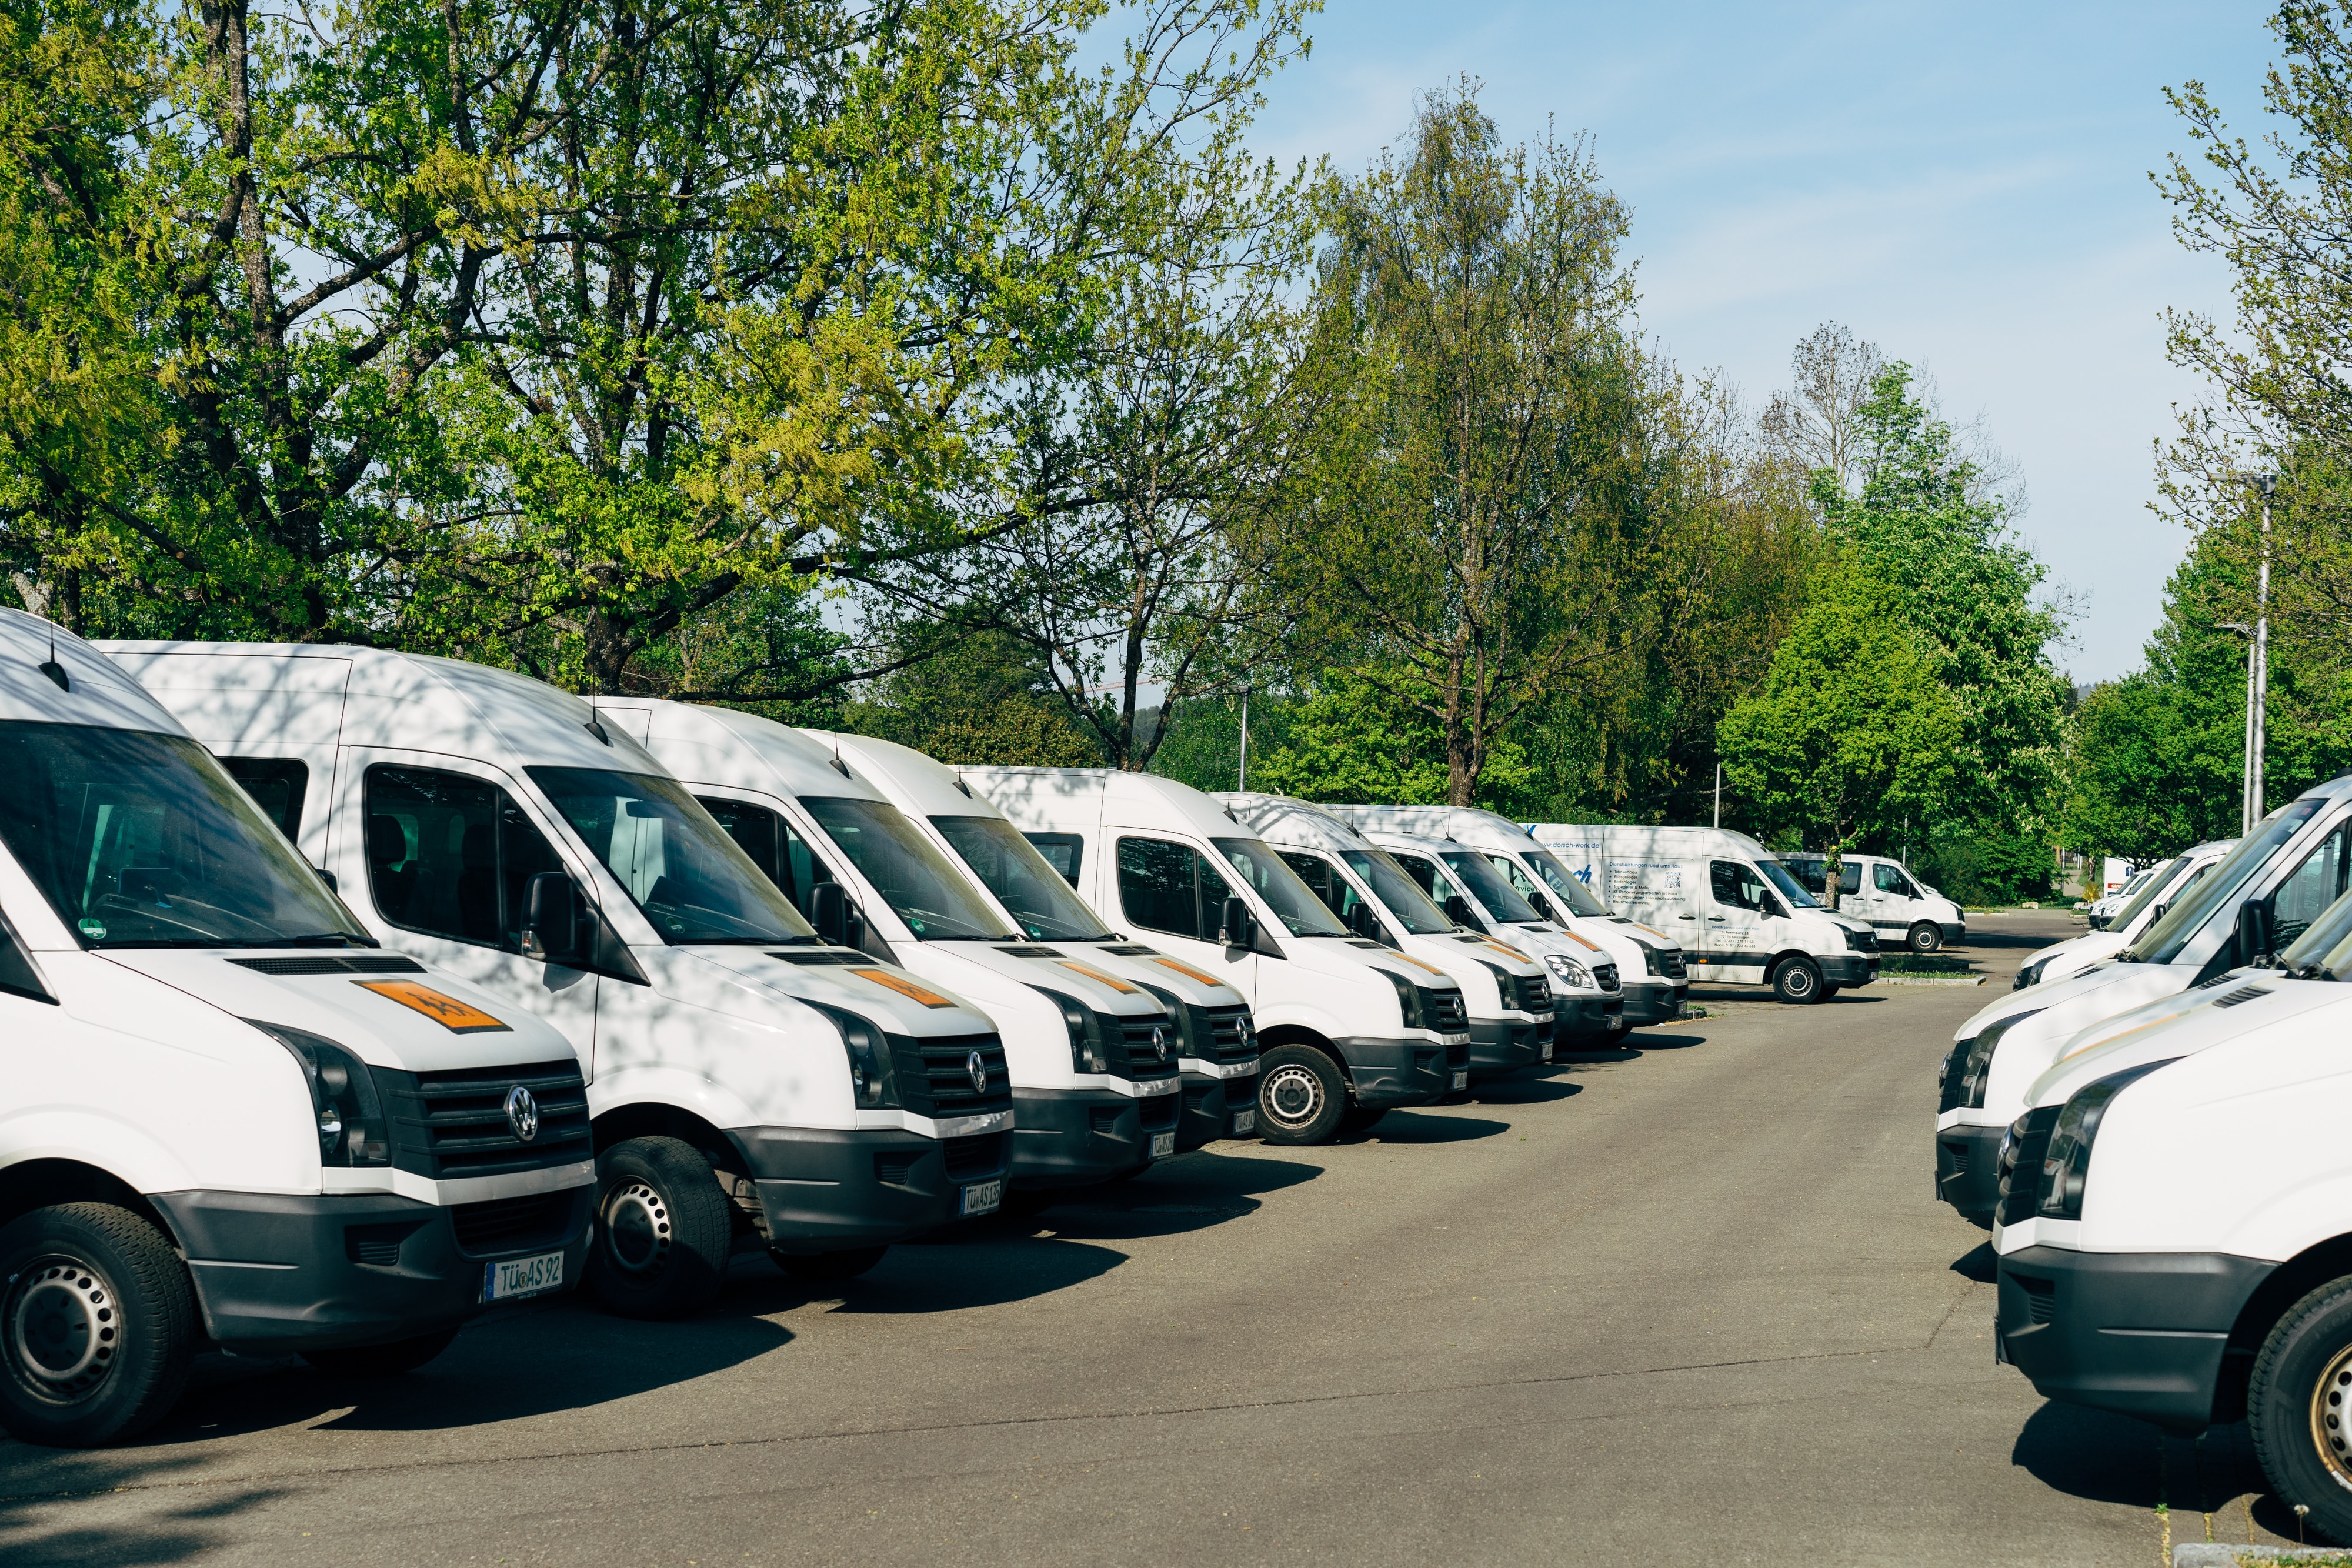 Fleet vans lined up parked